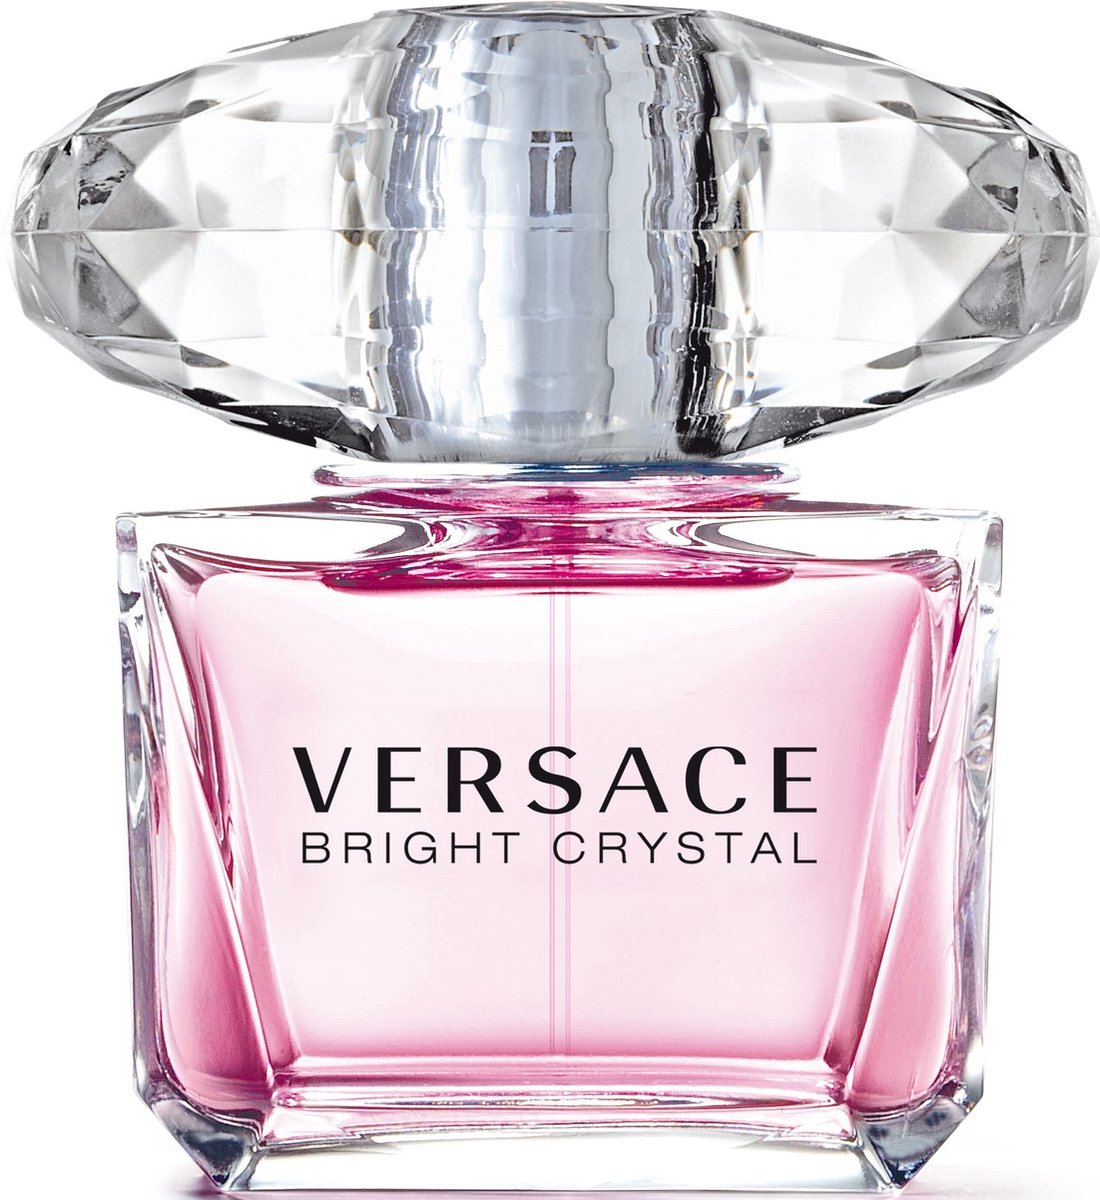 Zuivelproducten tellen Kostbaar Versace Bright Crystal 90 ml - Eau de Toilette - Damesparfum | bol.com